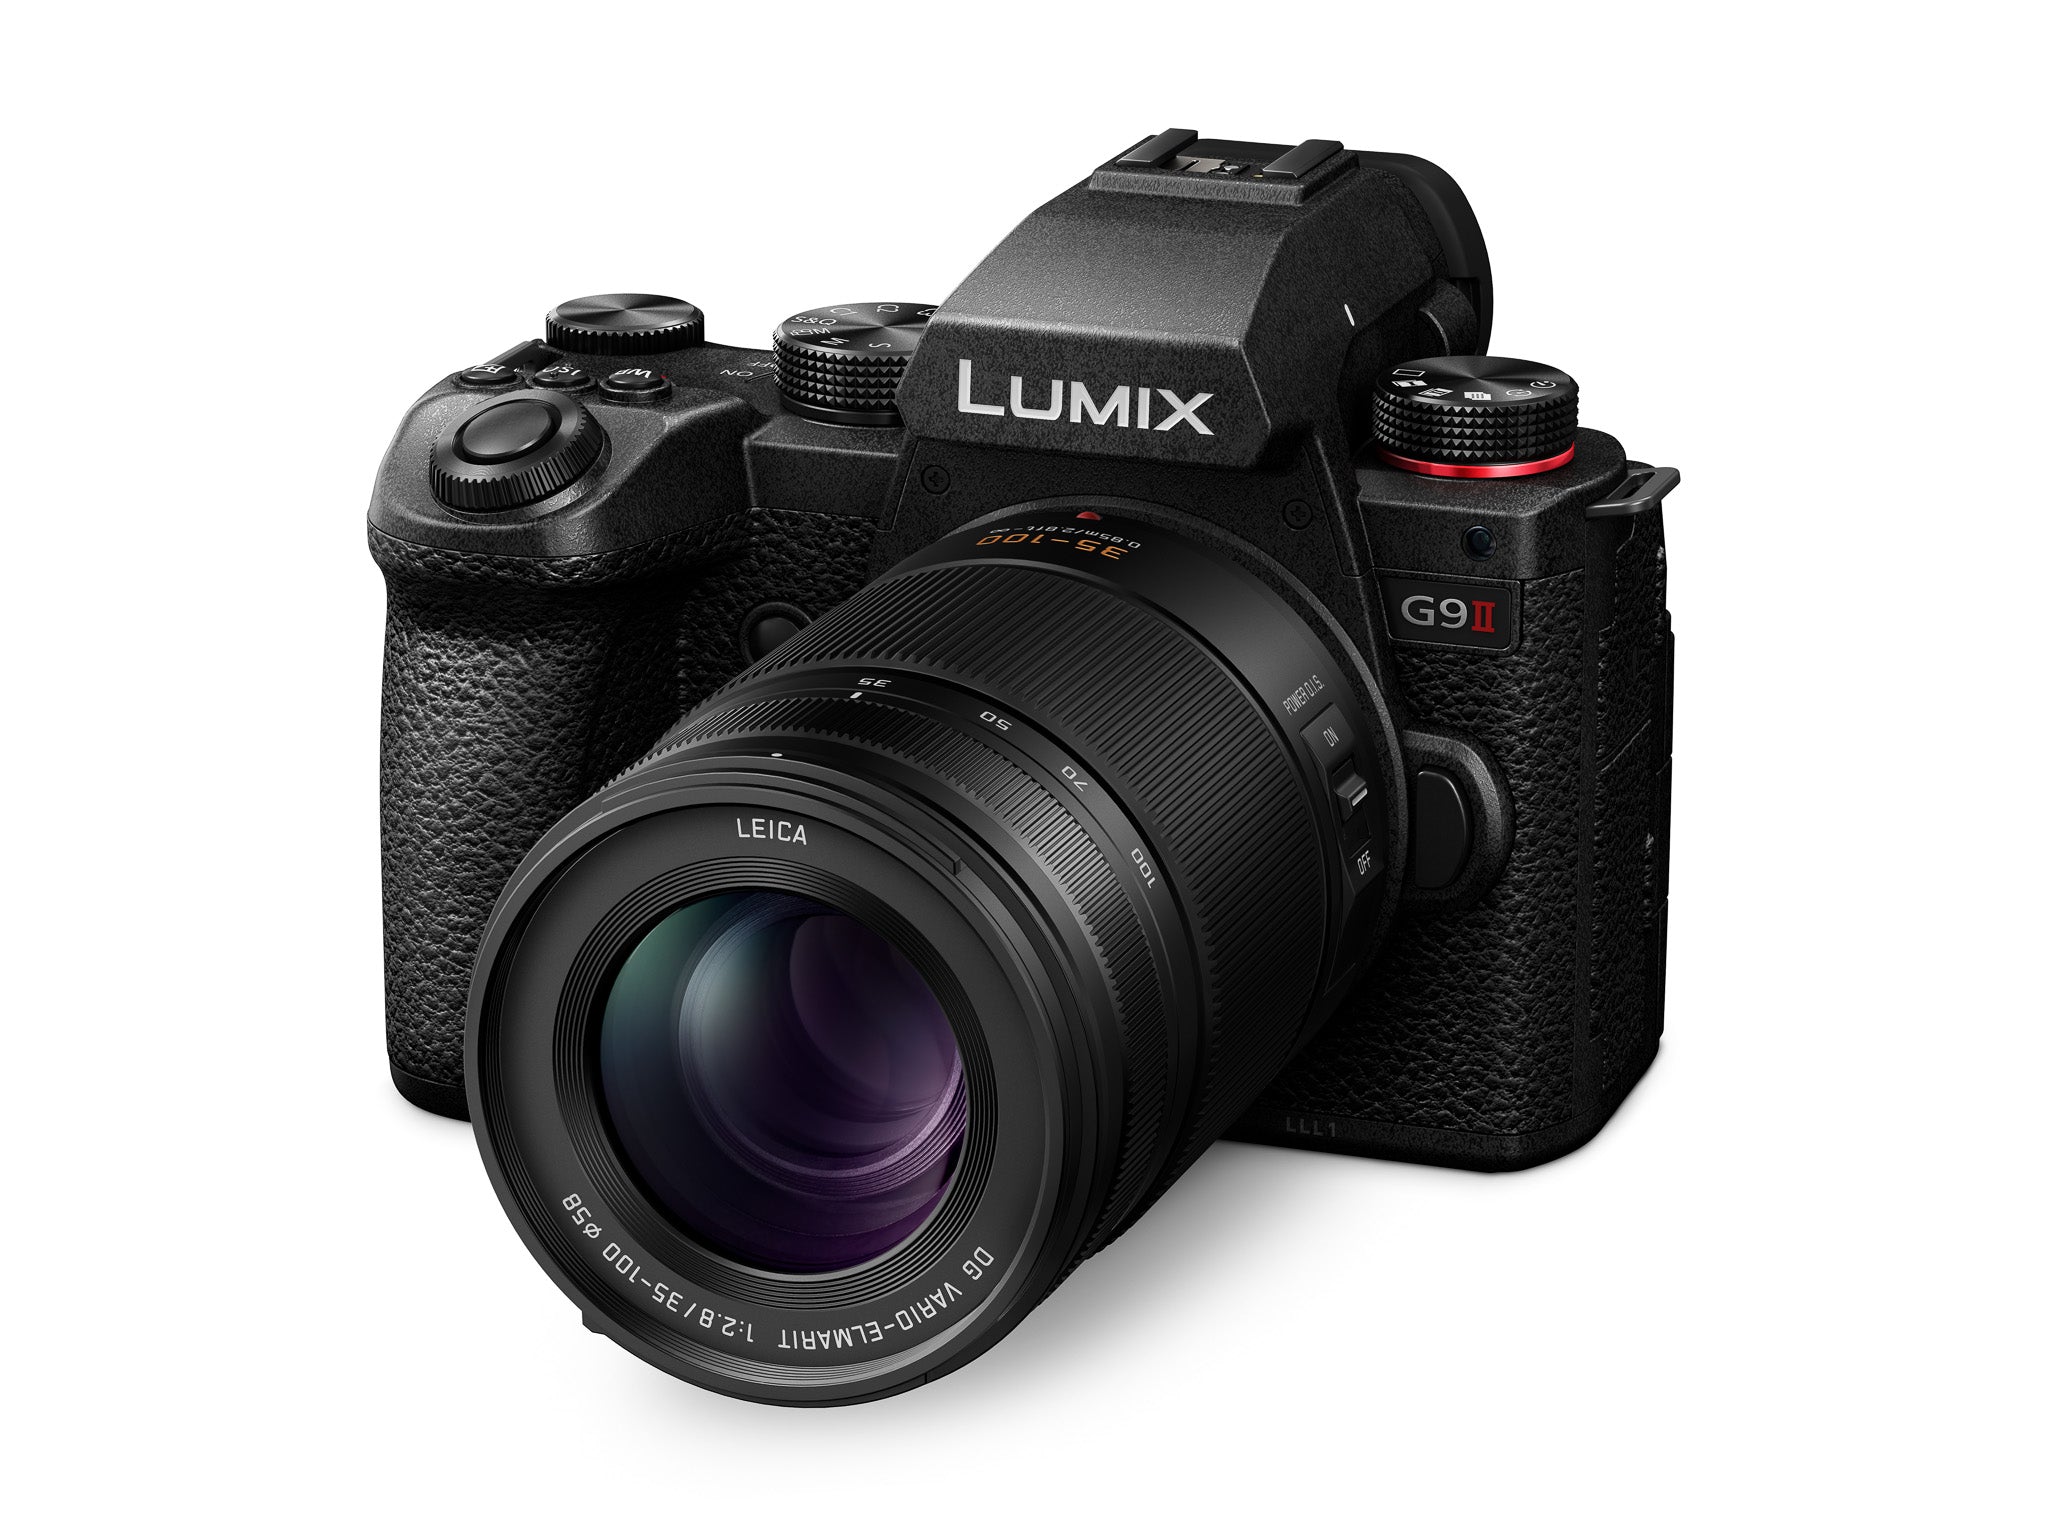 Panasonic Leica Elmarit 35-100mm f/2.8 Lens (H-ES35100E)